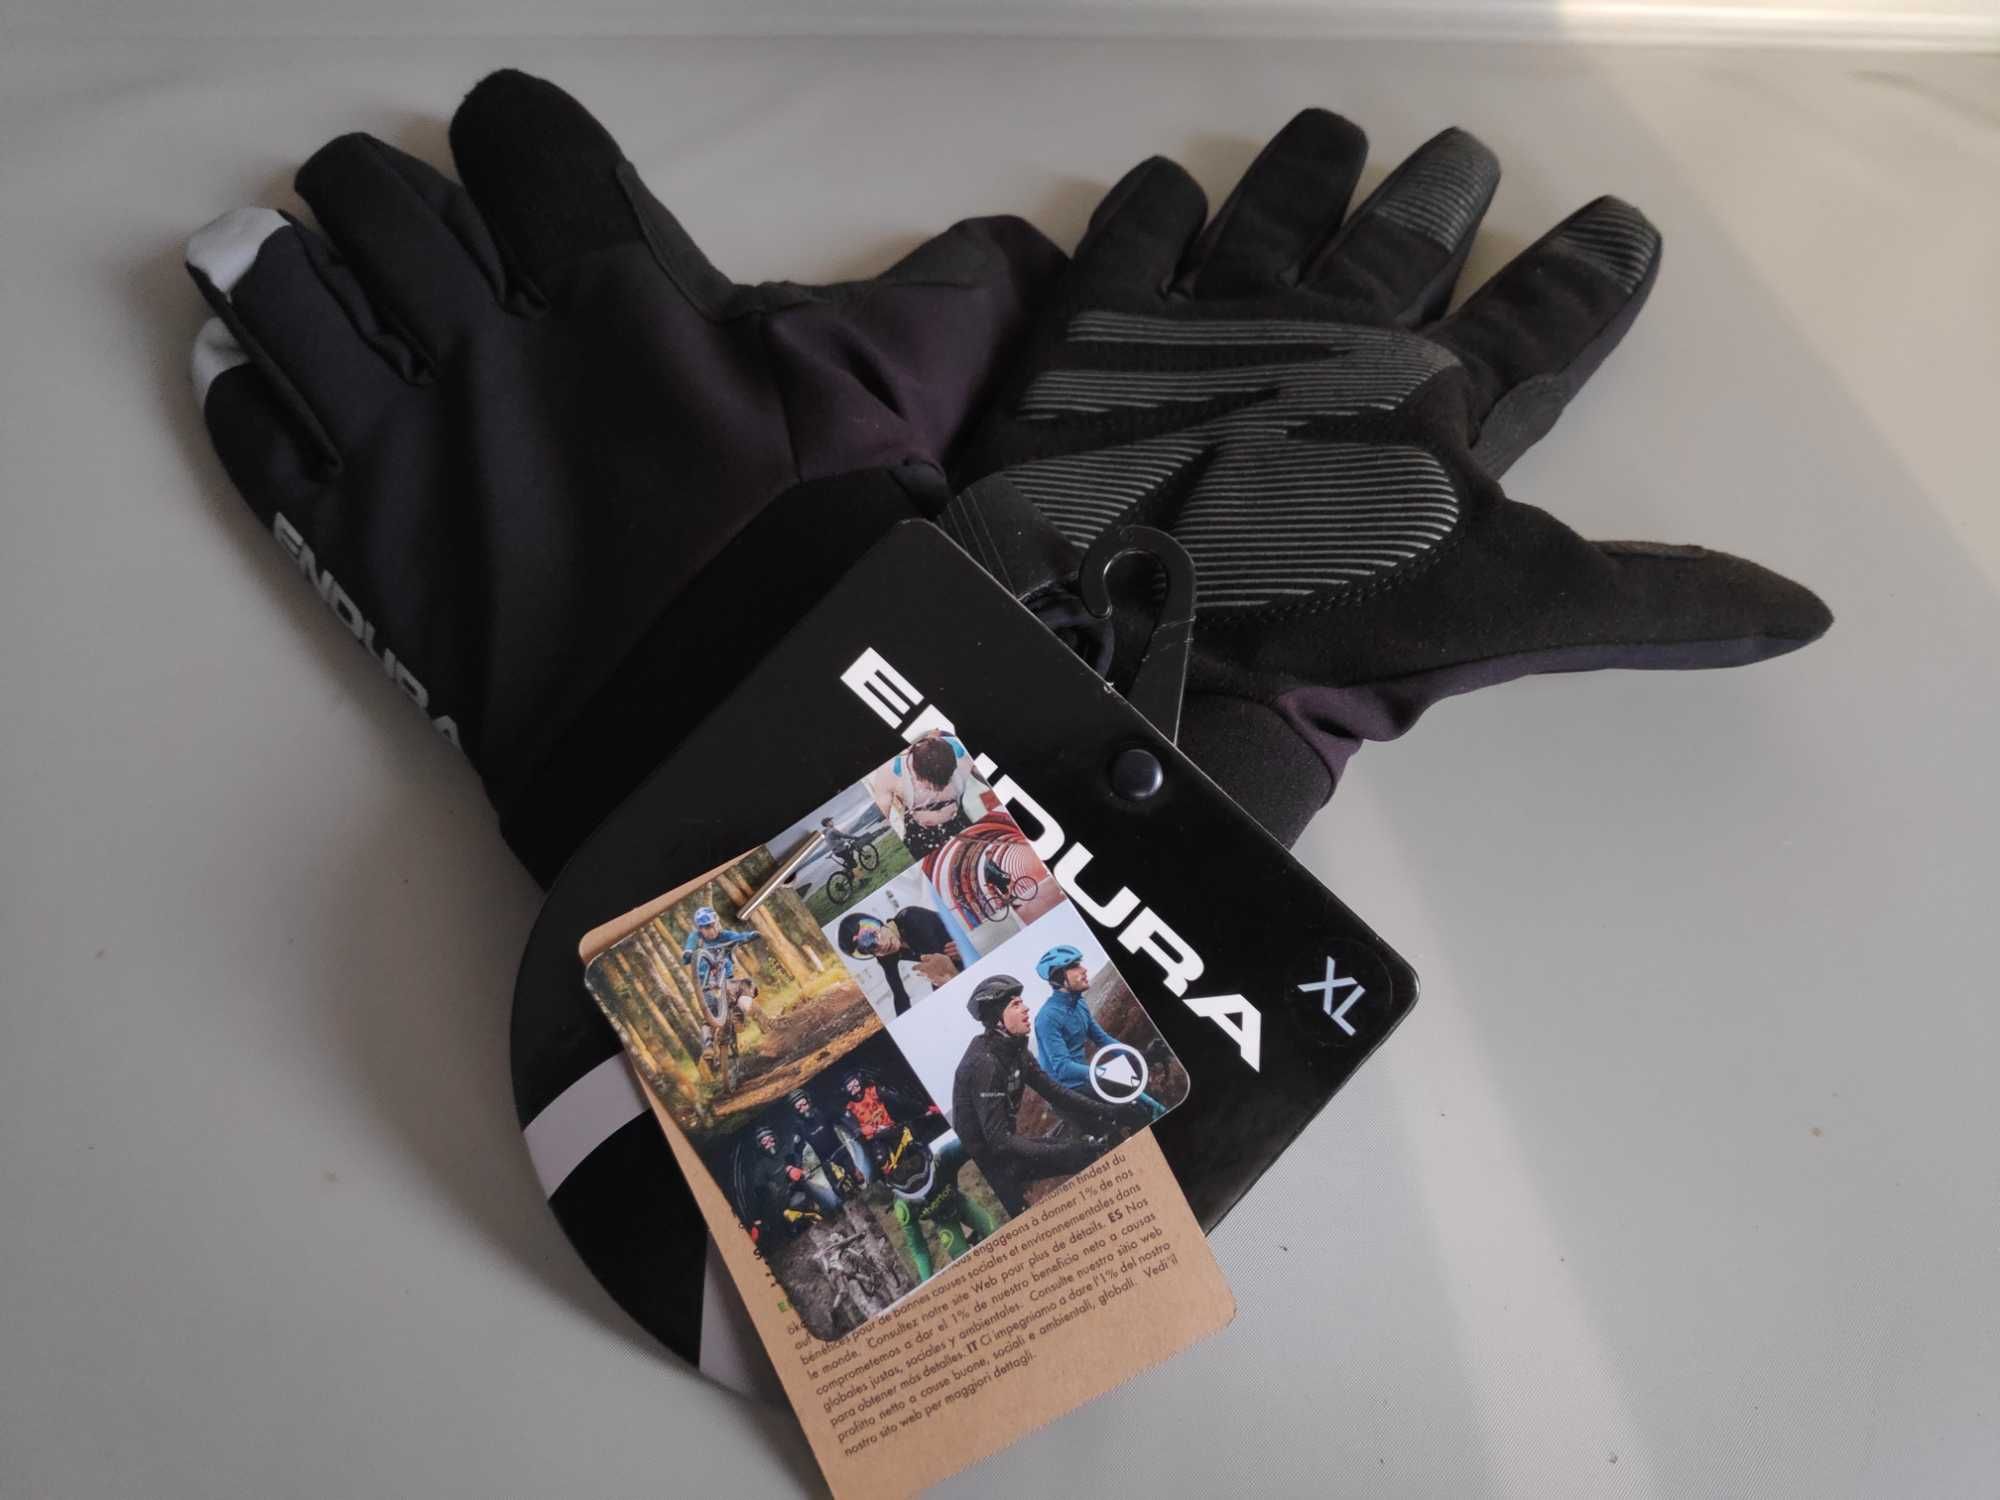 Ръкавици Endura Strike, размер XL